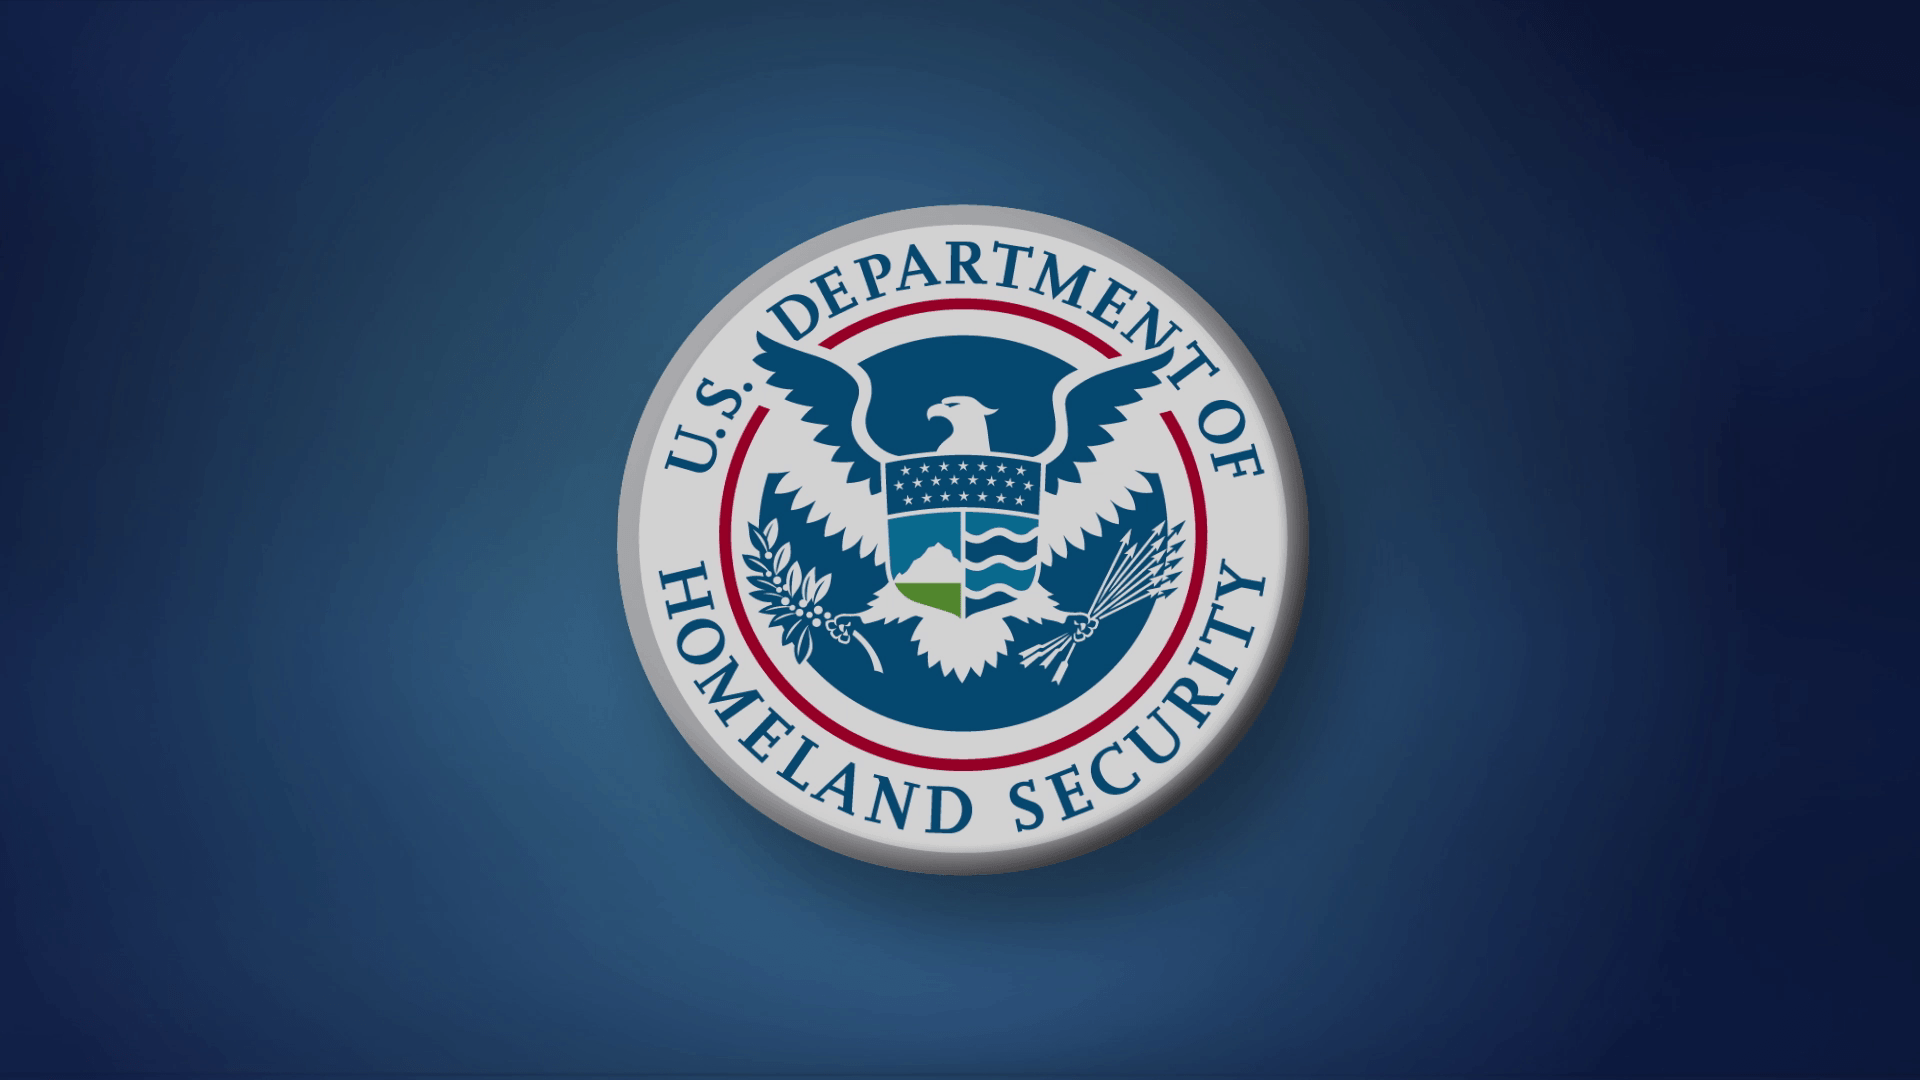 Customs and Border Protection Logo - Walls Work. U.S. Customs and Border Protection